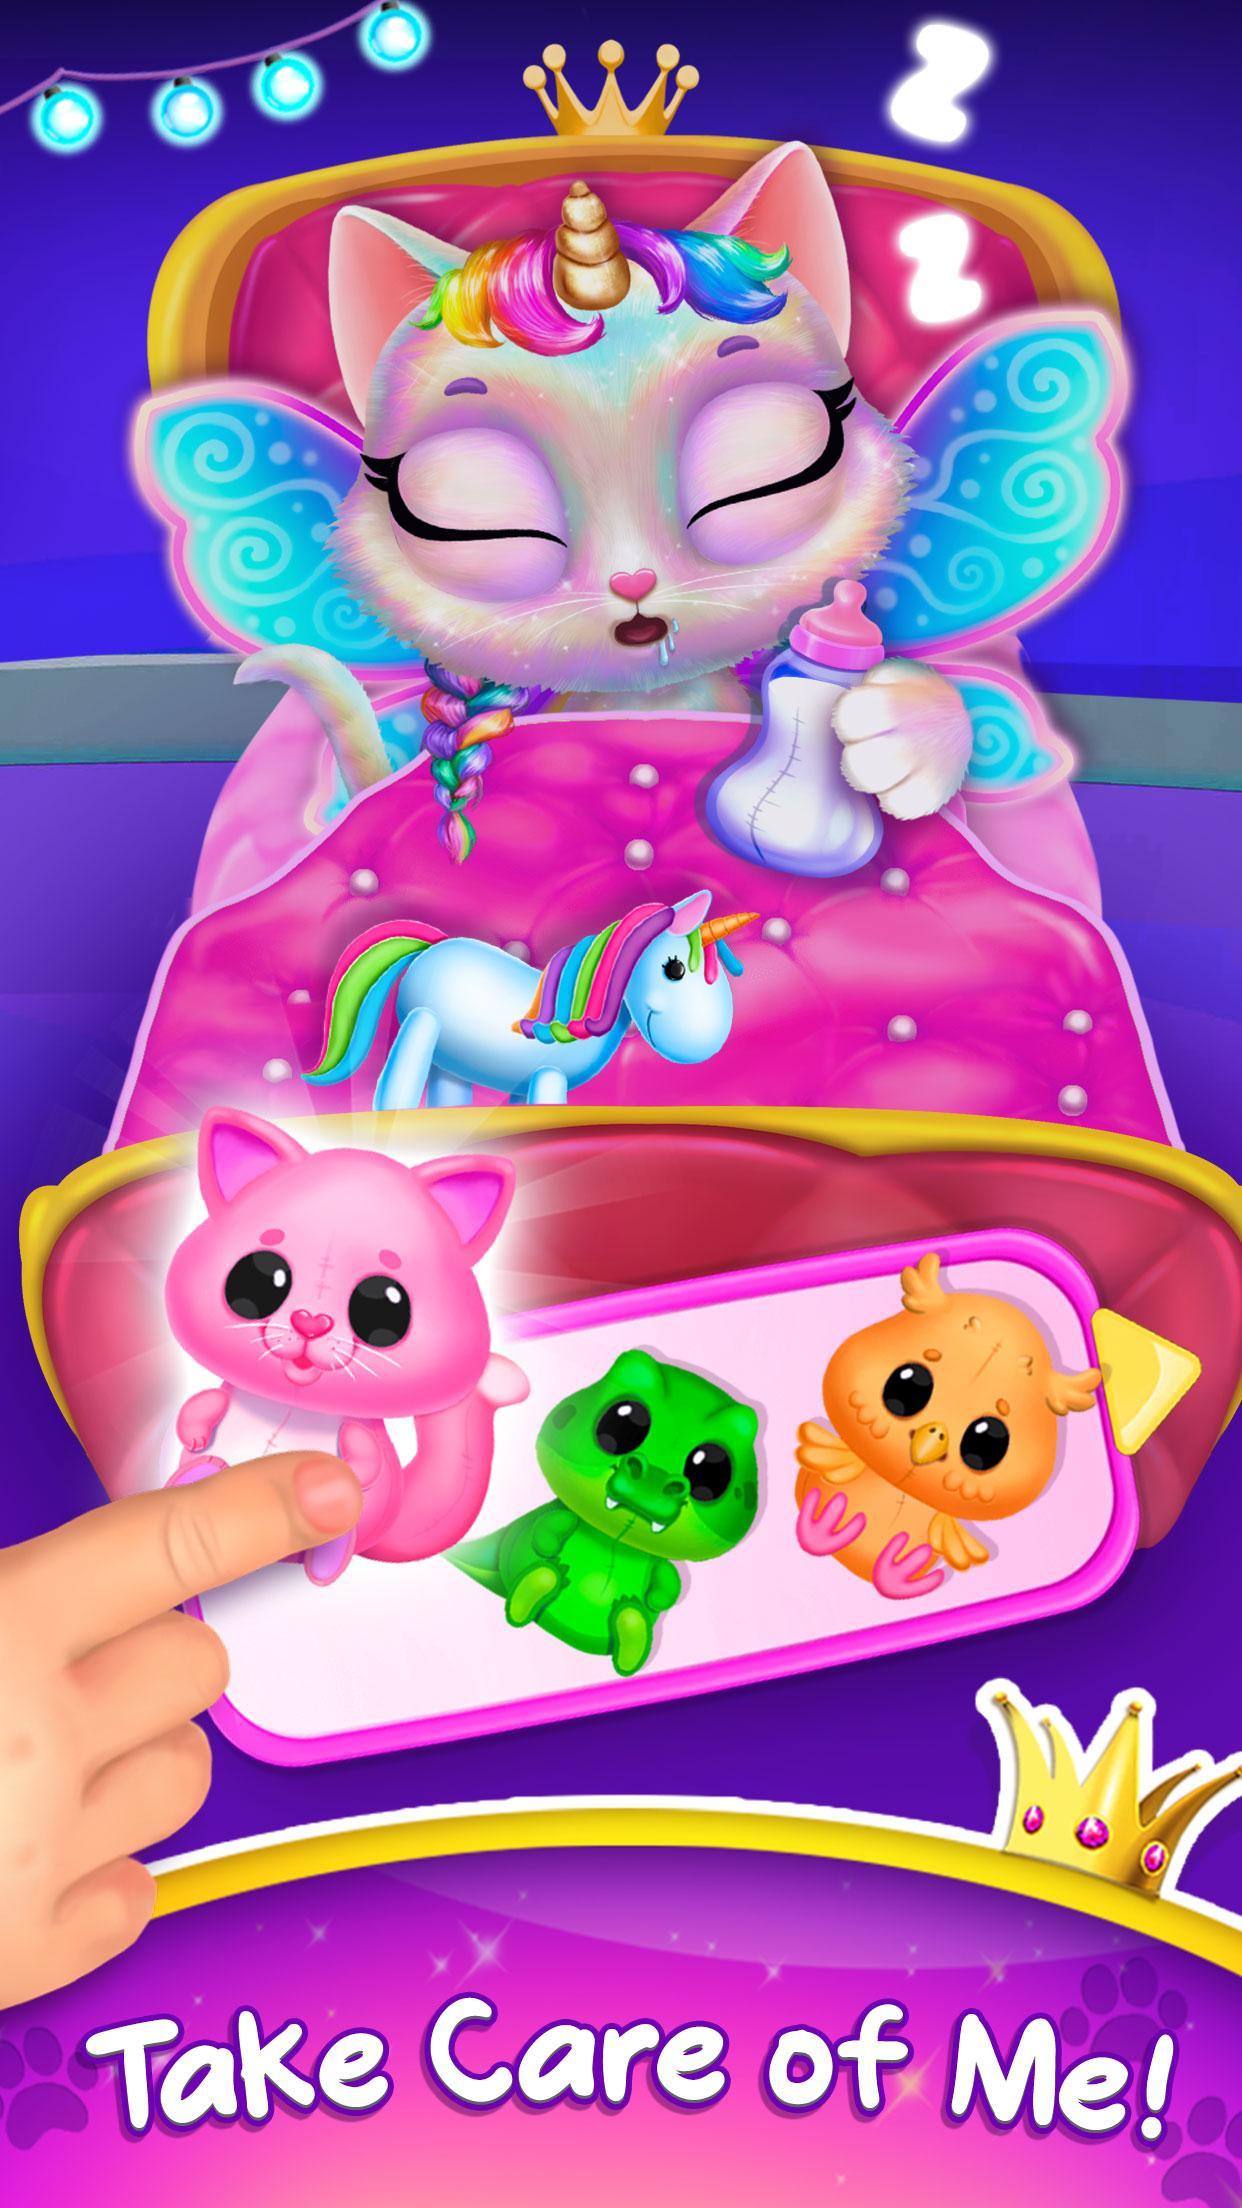 Twinkle - Unicorn Cat Princess遊戲截圖